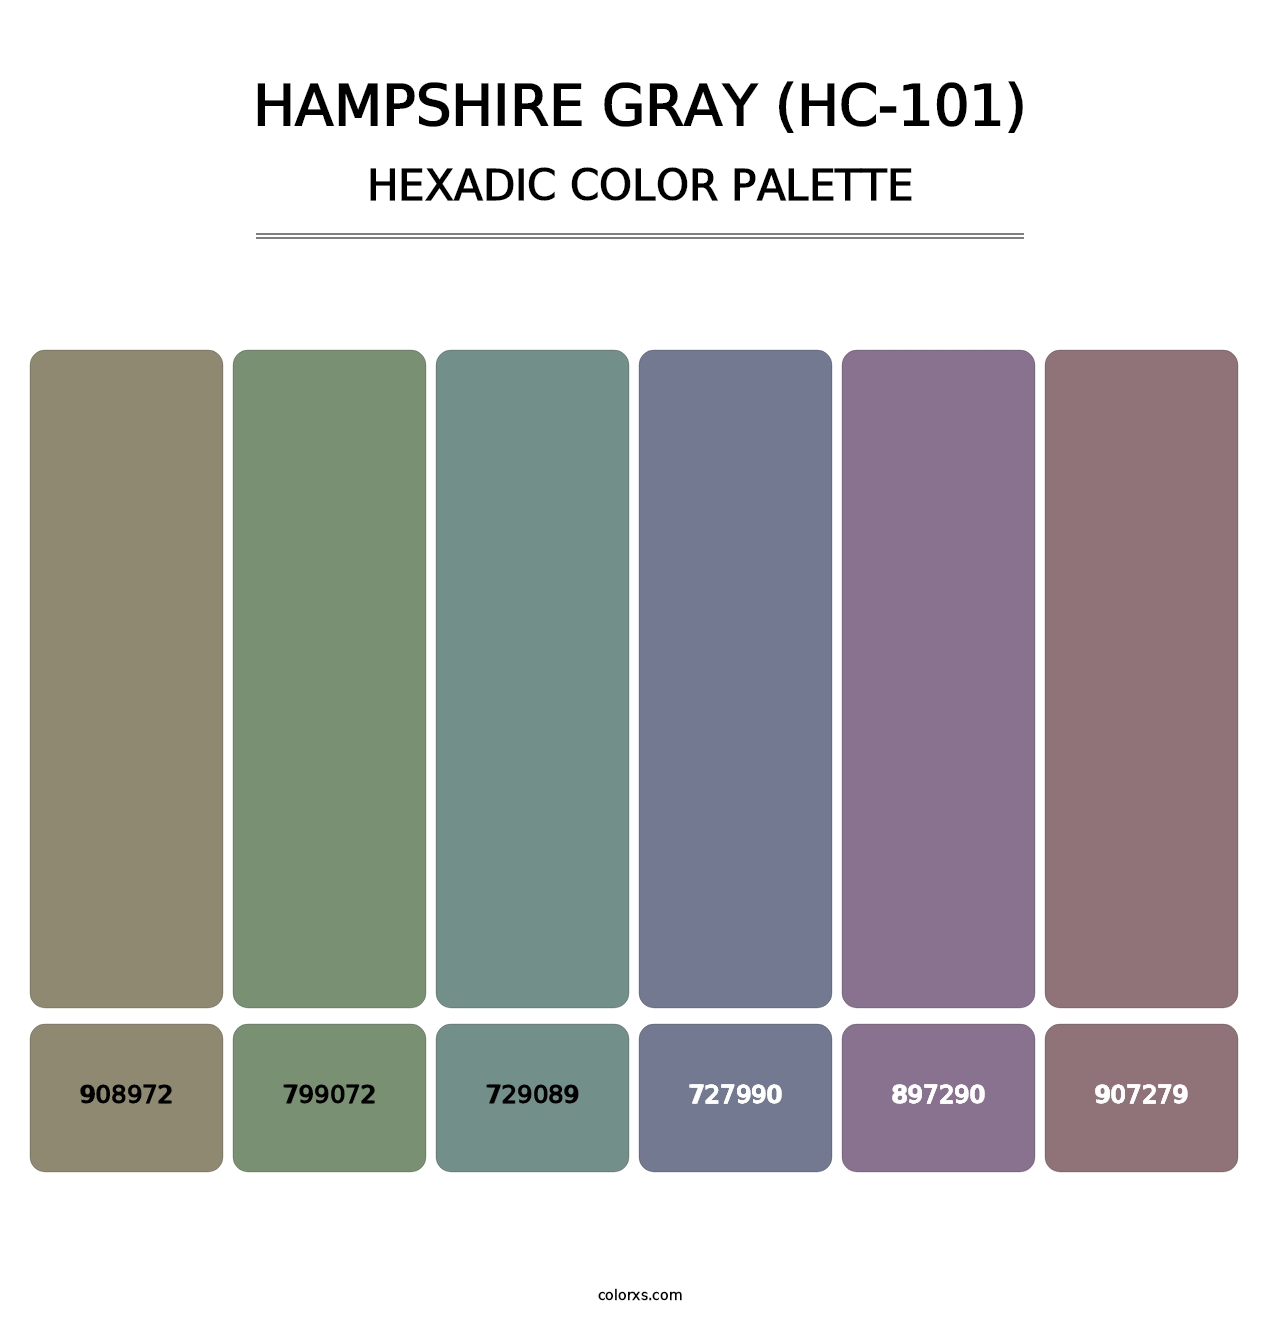 Hampshire Gray (HC-101) - Hexadic Color Palette